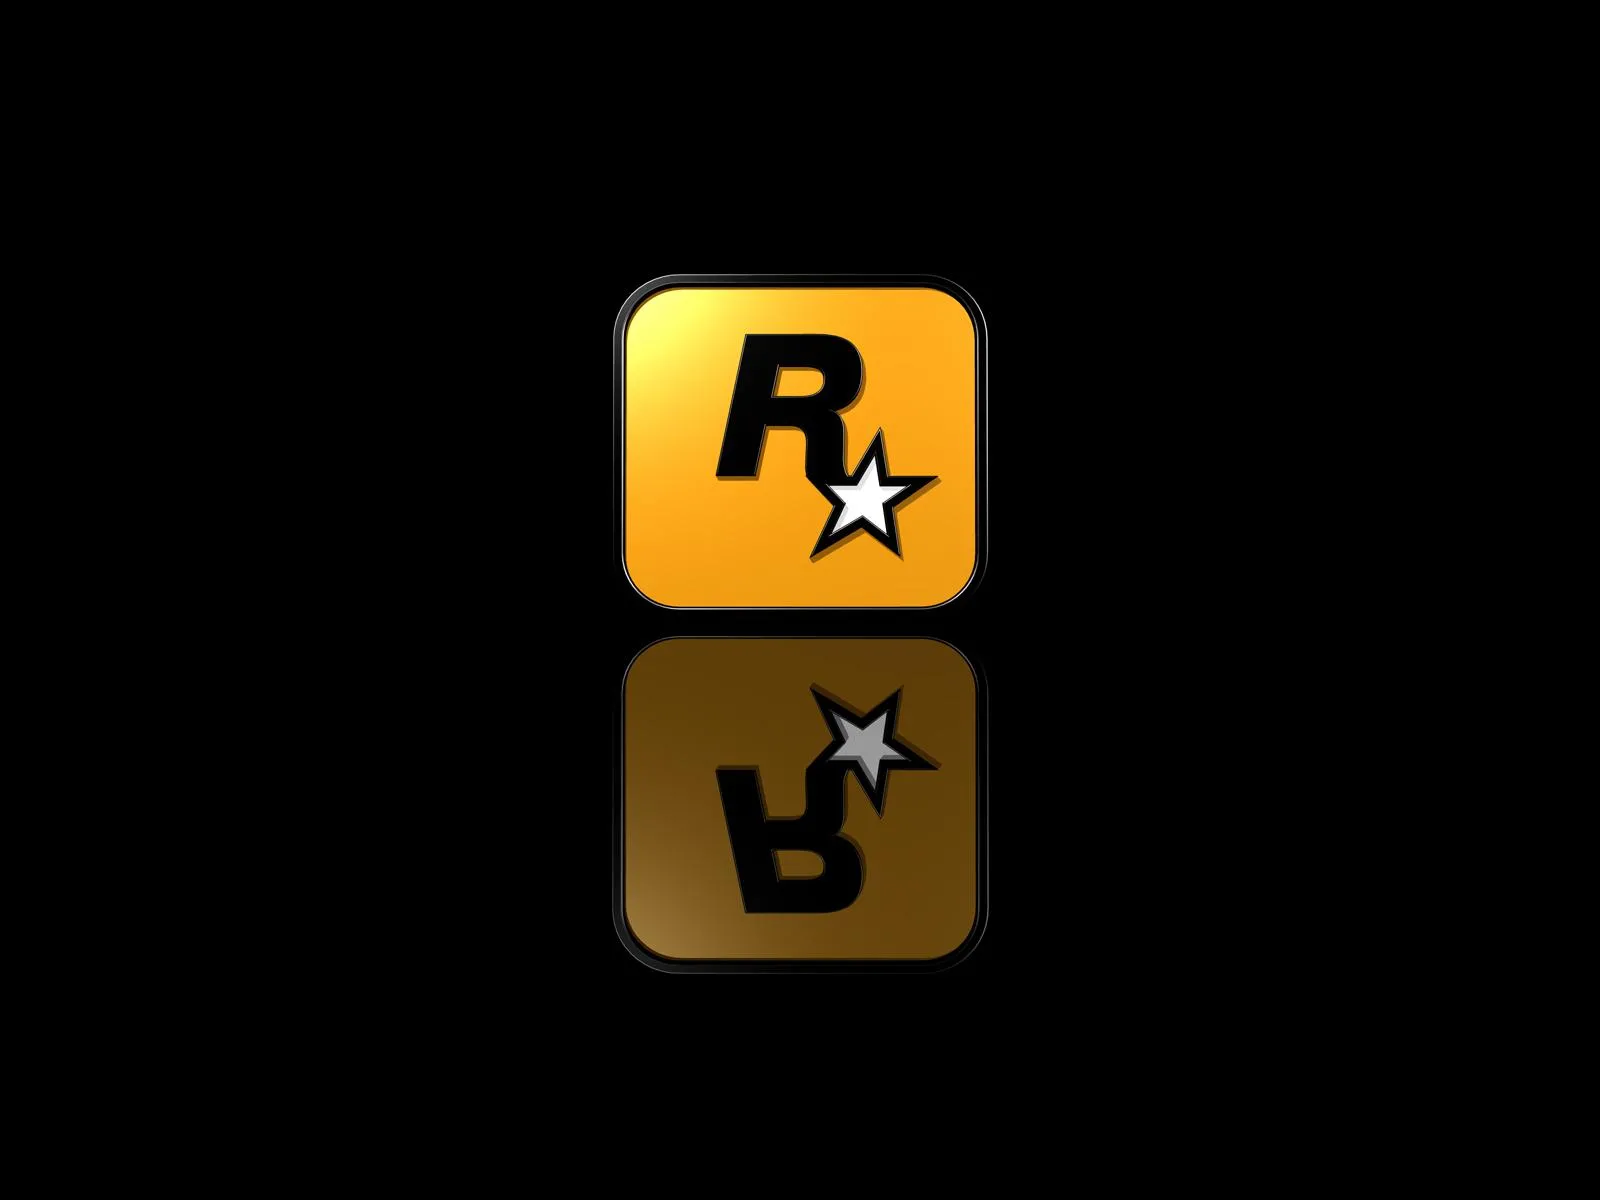 5 Rockstar Games Titles That Deserve a Remake / Remaster